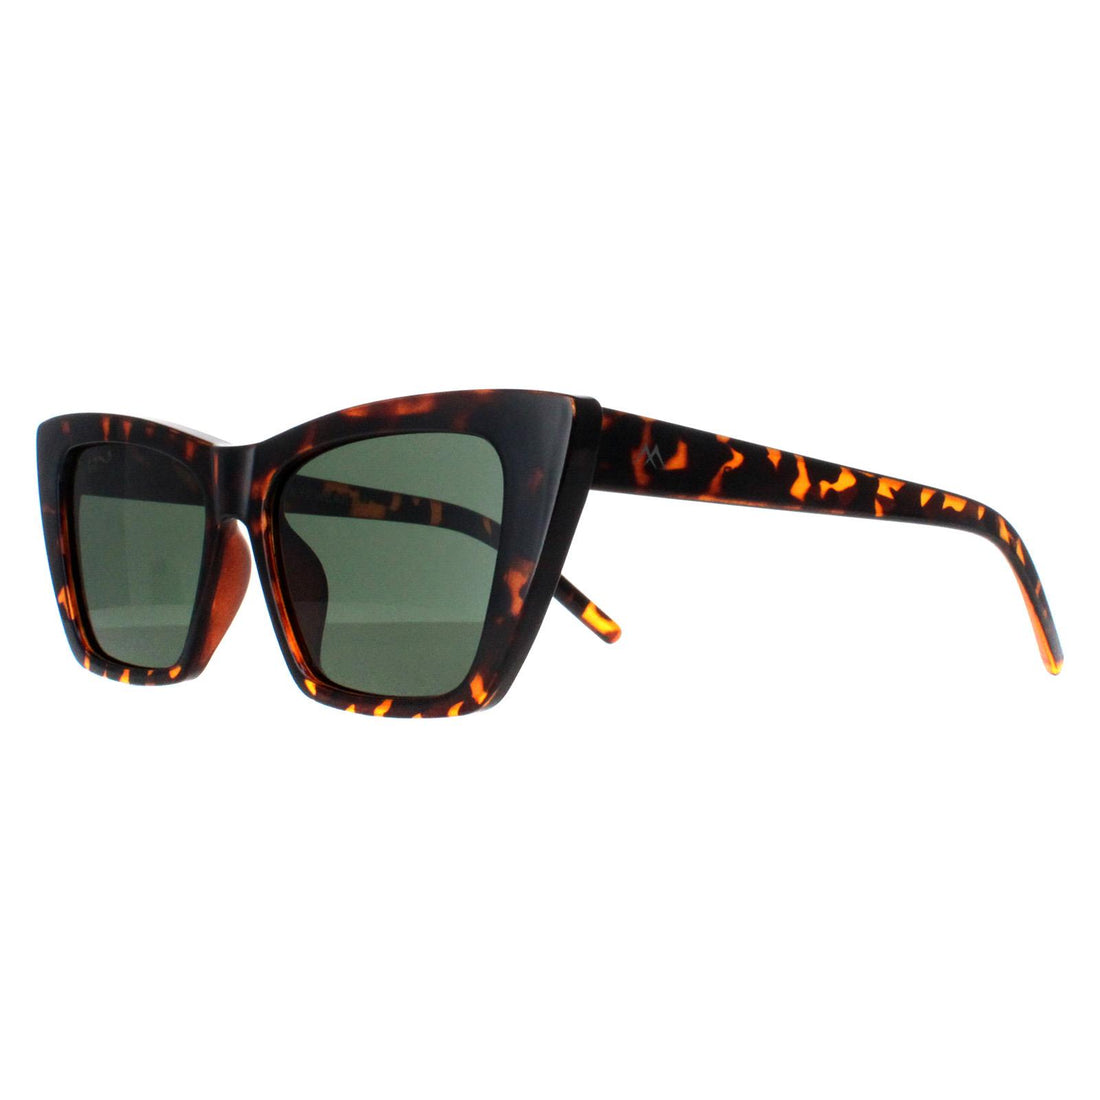 Montana Sunglasses MP64 B Shiny Turtle G15 Polarized